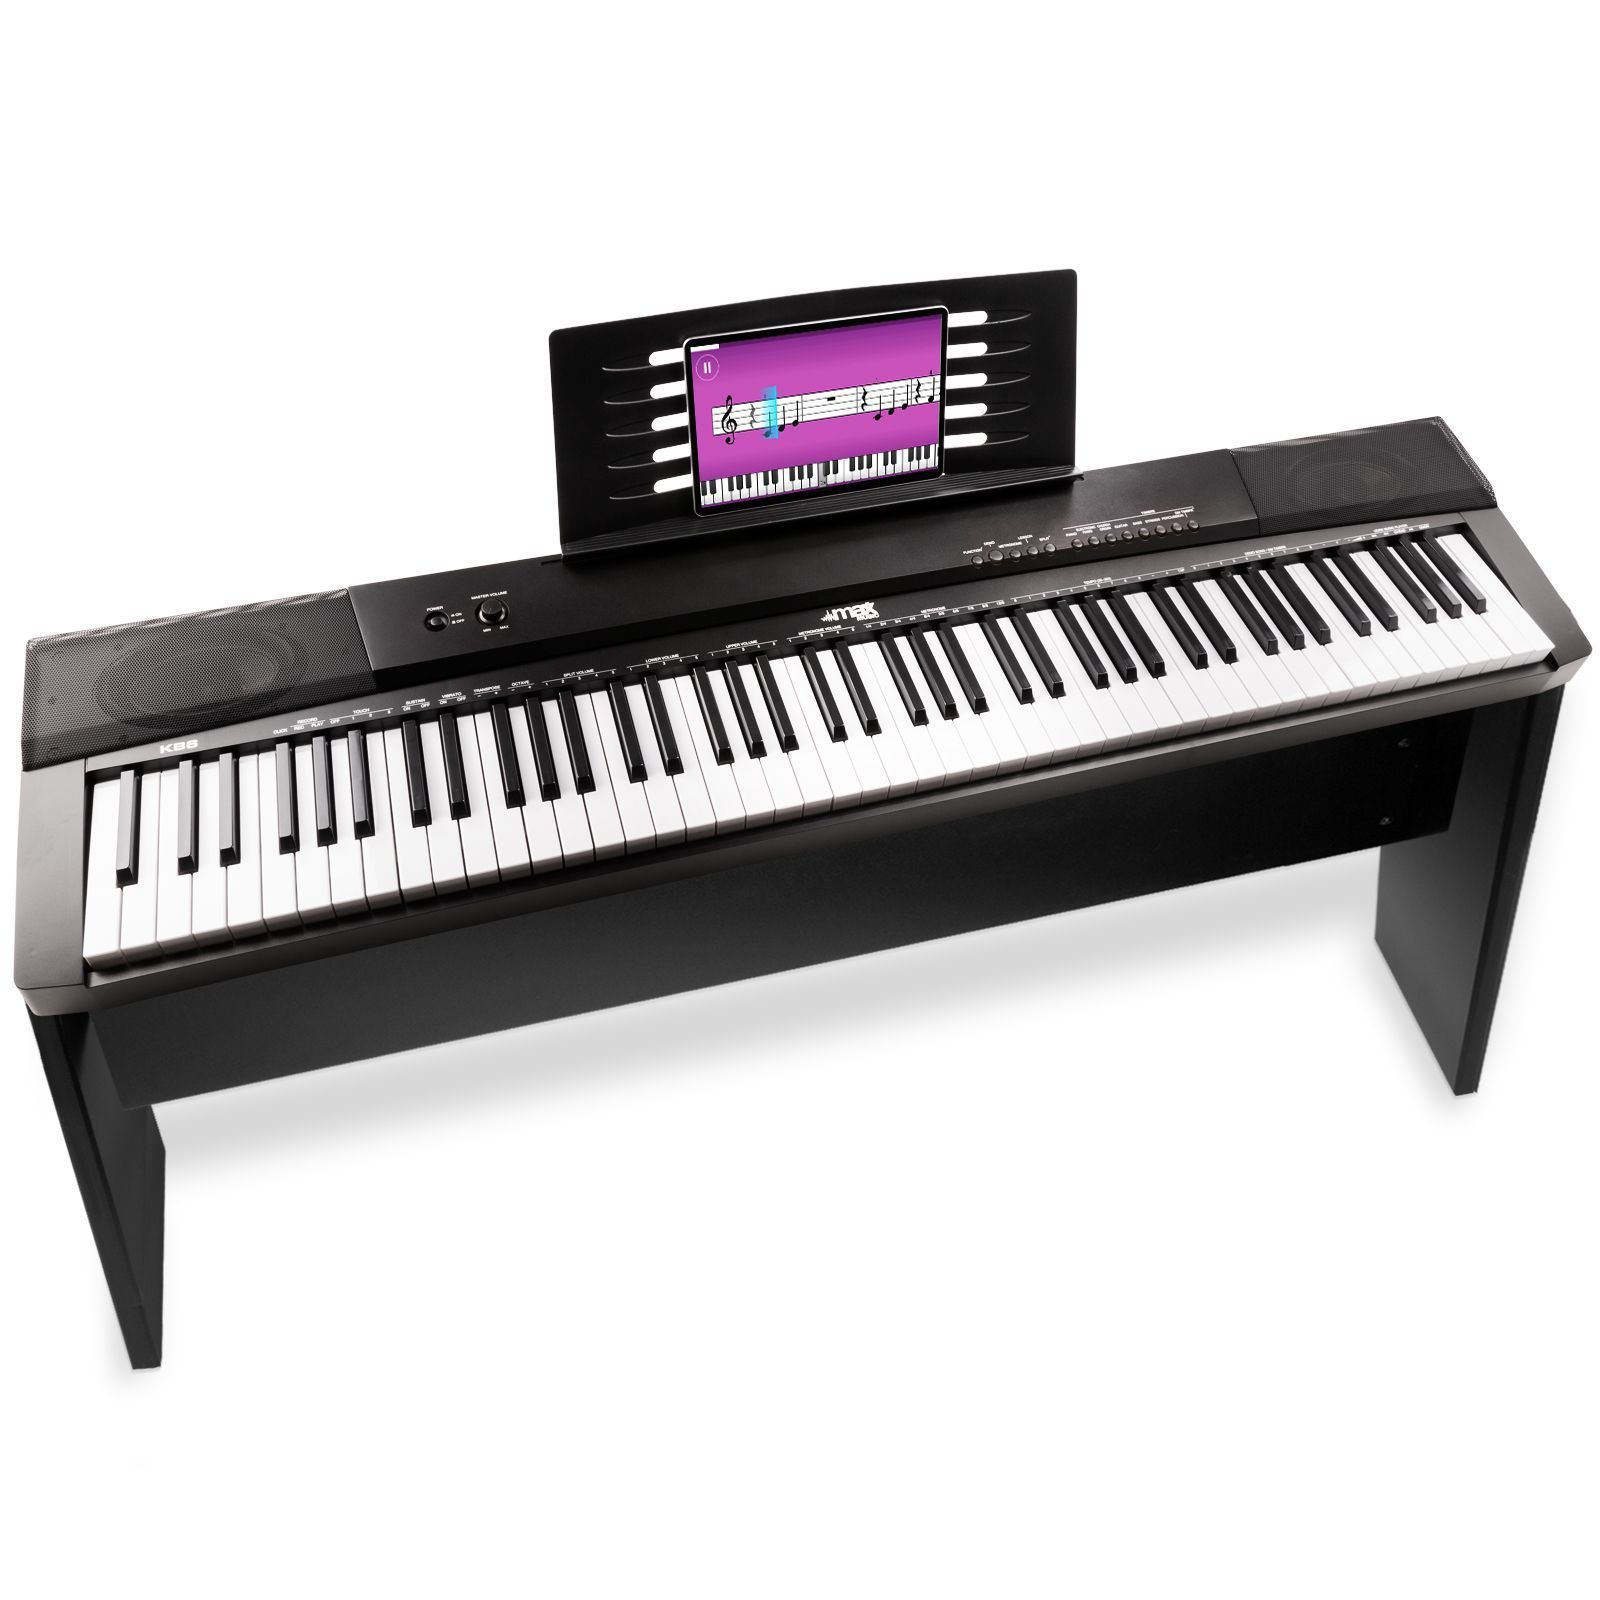 Retourdeal - MAX KB6W digitale piano met 88 toetsen en meubel